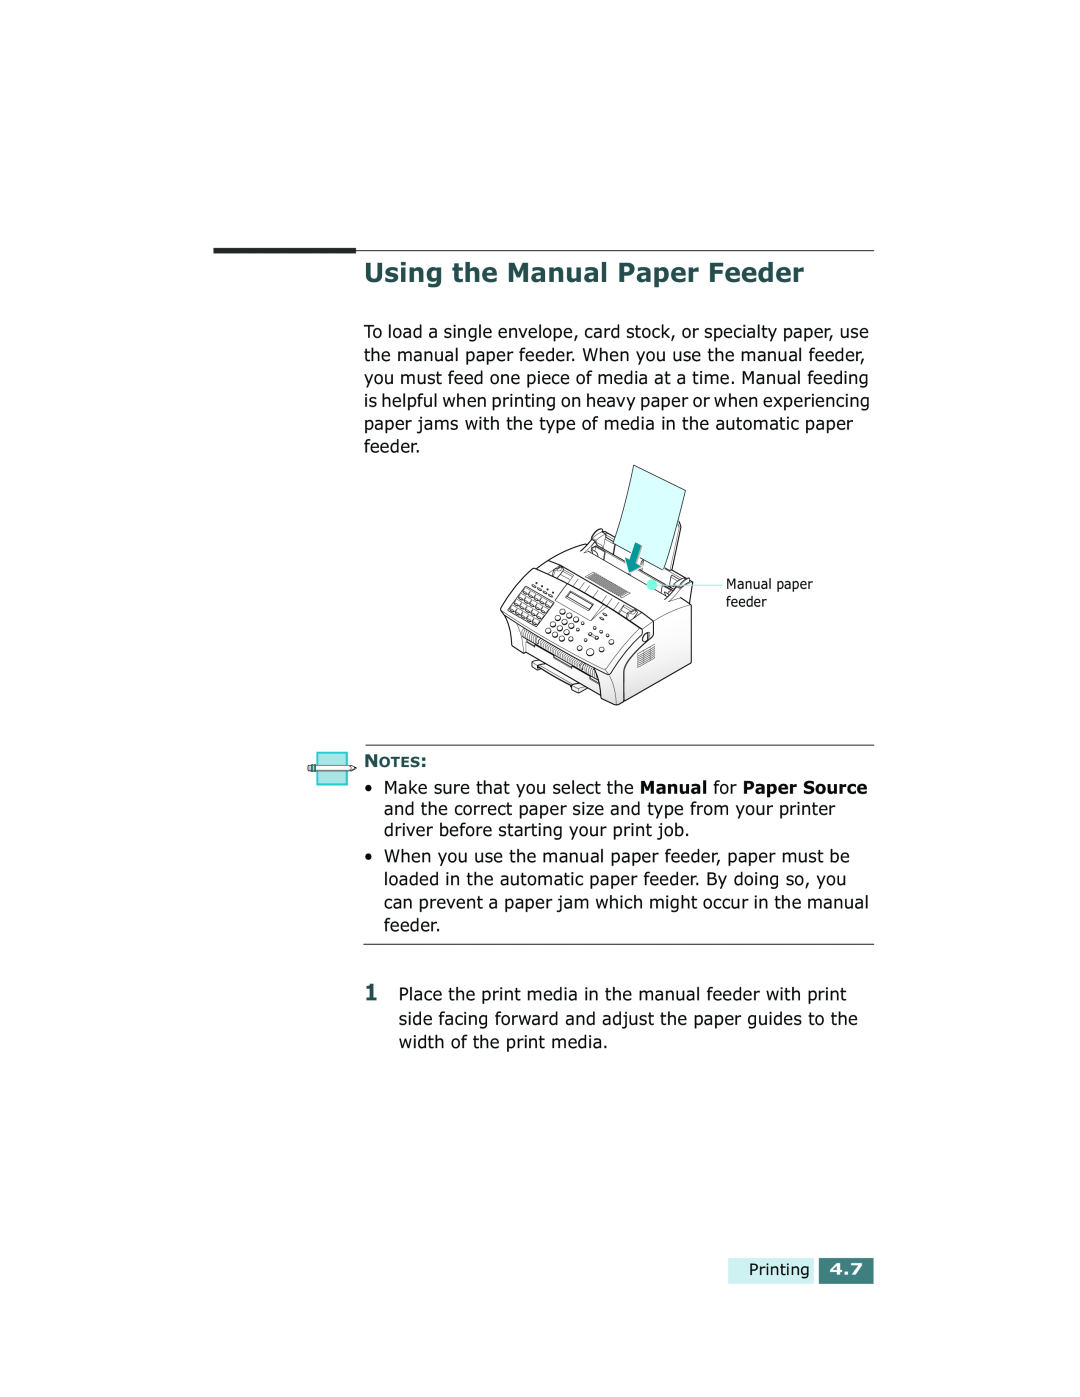 Xerox Pro 580 manual Using the Manual Paper Feeder, Manual paper feeder 